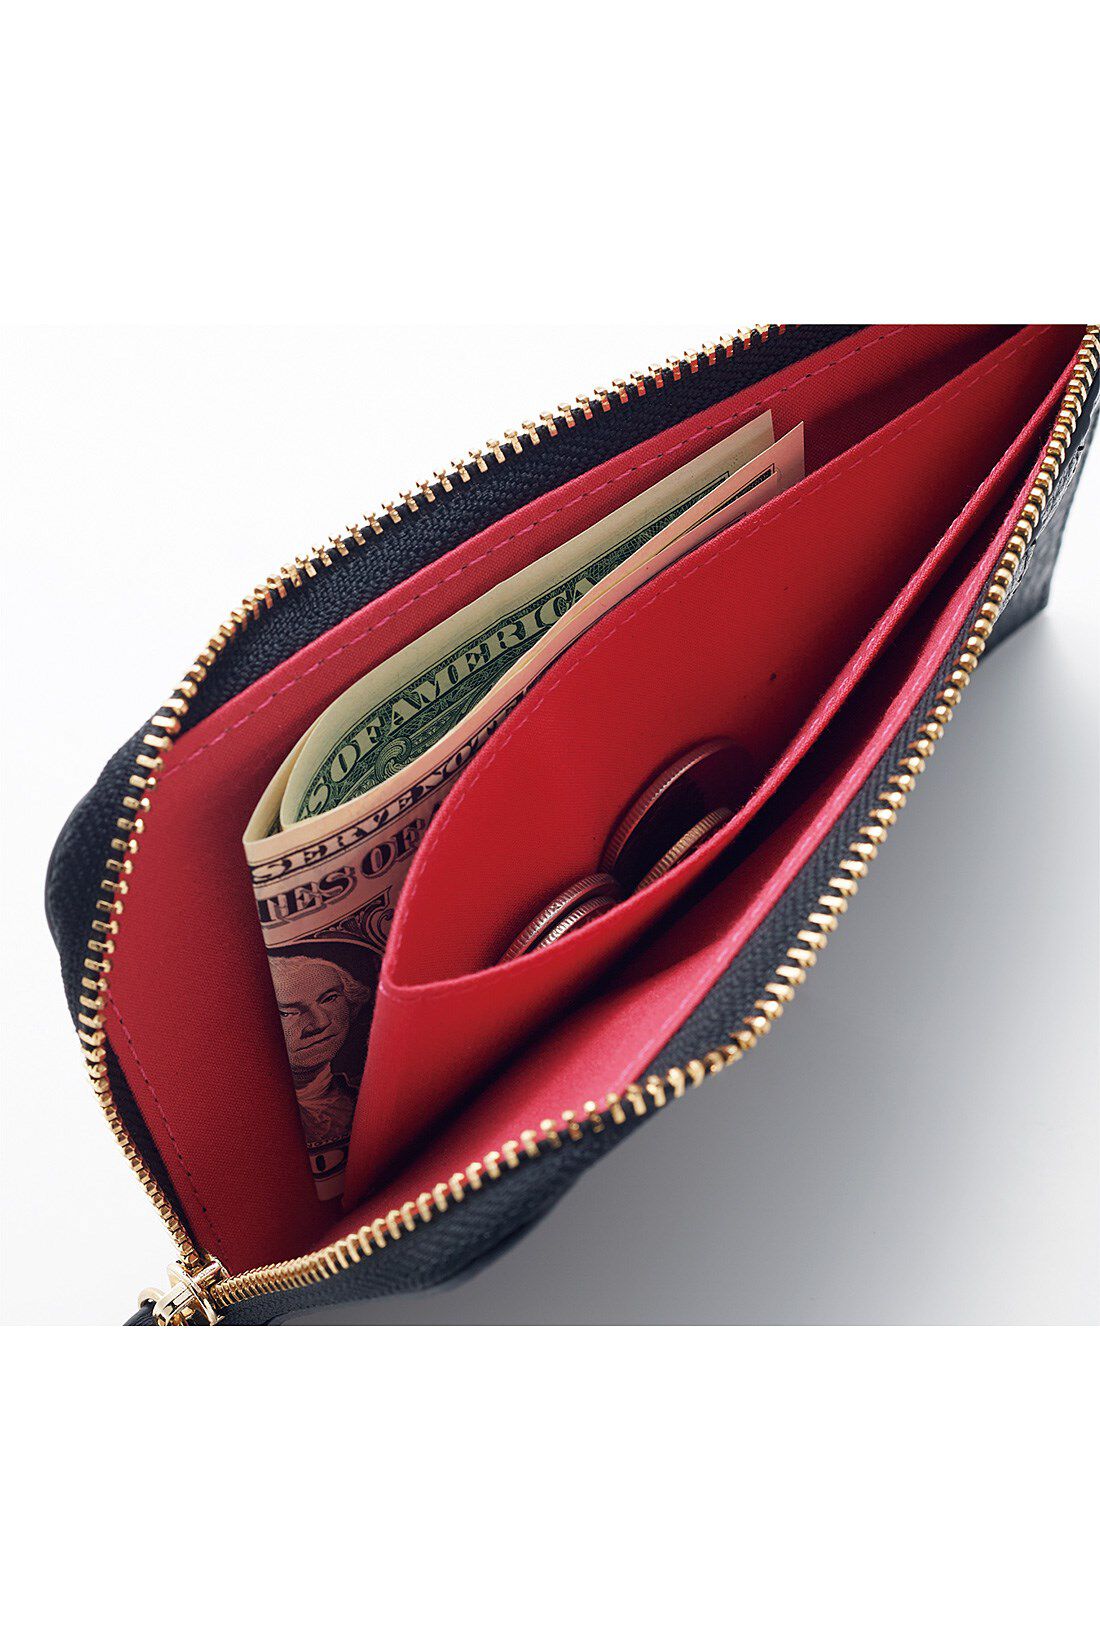 IEDIT|IEDIT[イディット]　本革が大人にうれしい スターエンボス加工のスリムミニ財布〈シルバー〉|中が見やすい明るめピンクで気分も上がります。